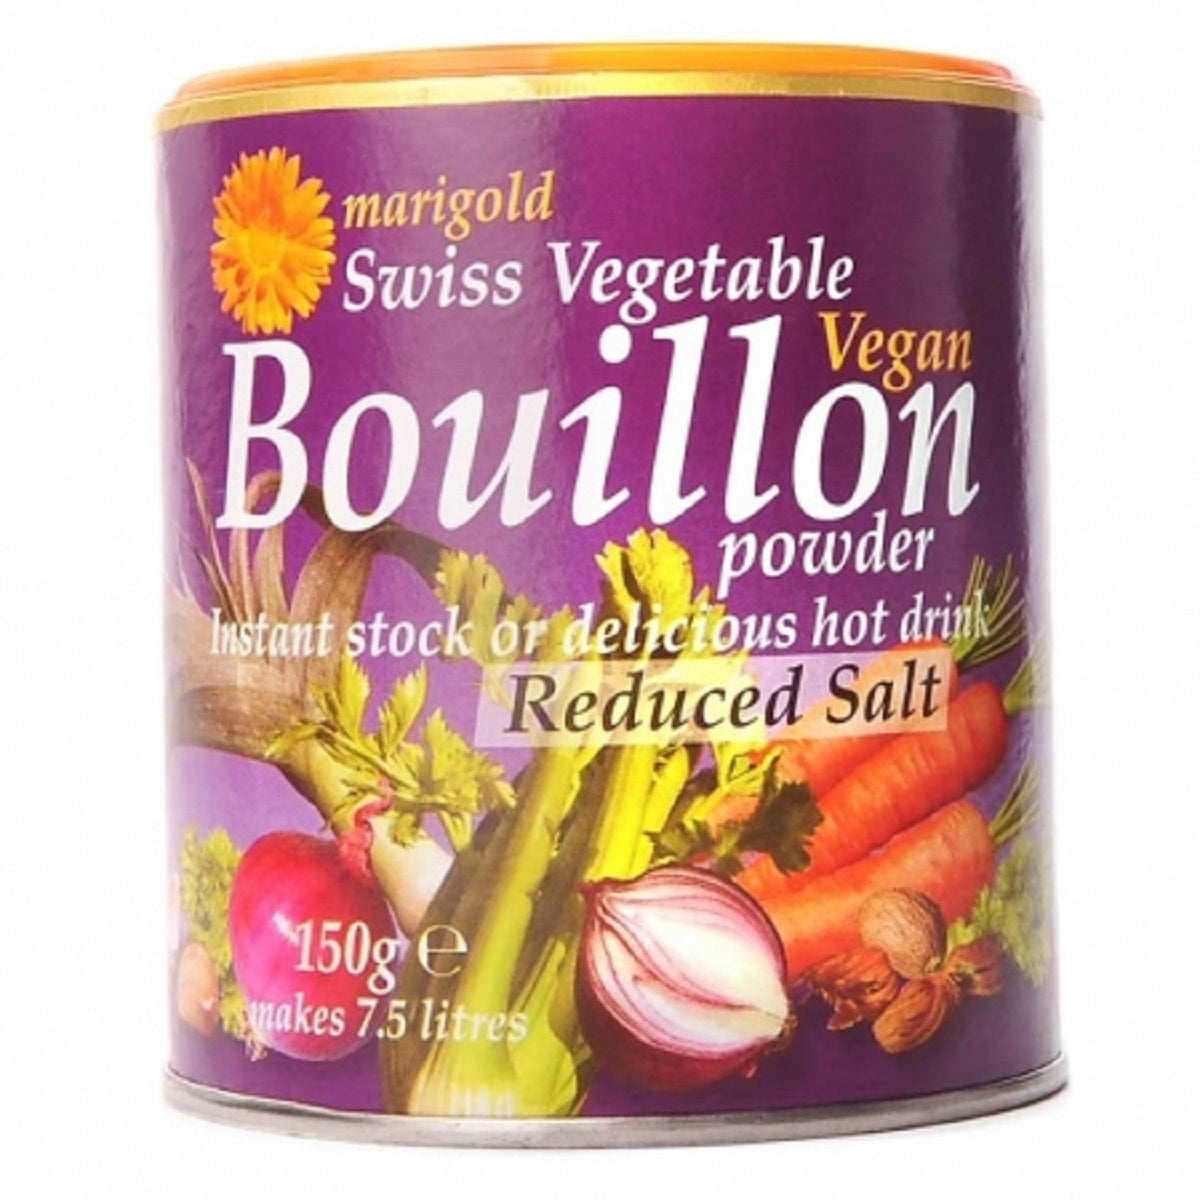 Marigold Swiss Vegetable Vegan Bouillon Powder 150g